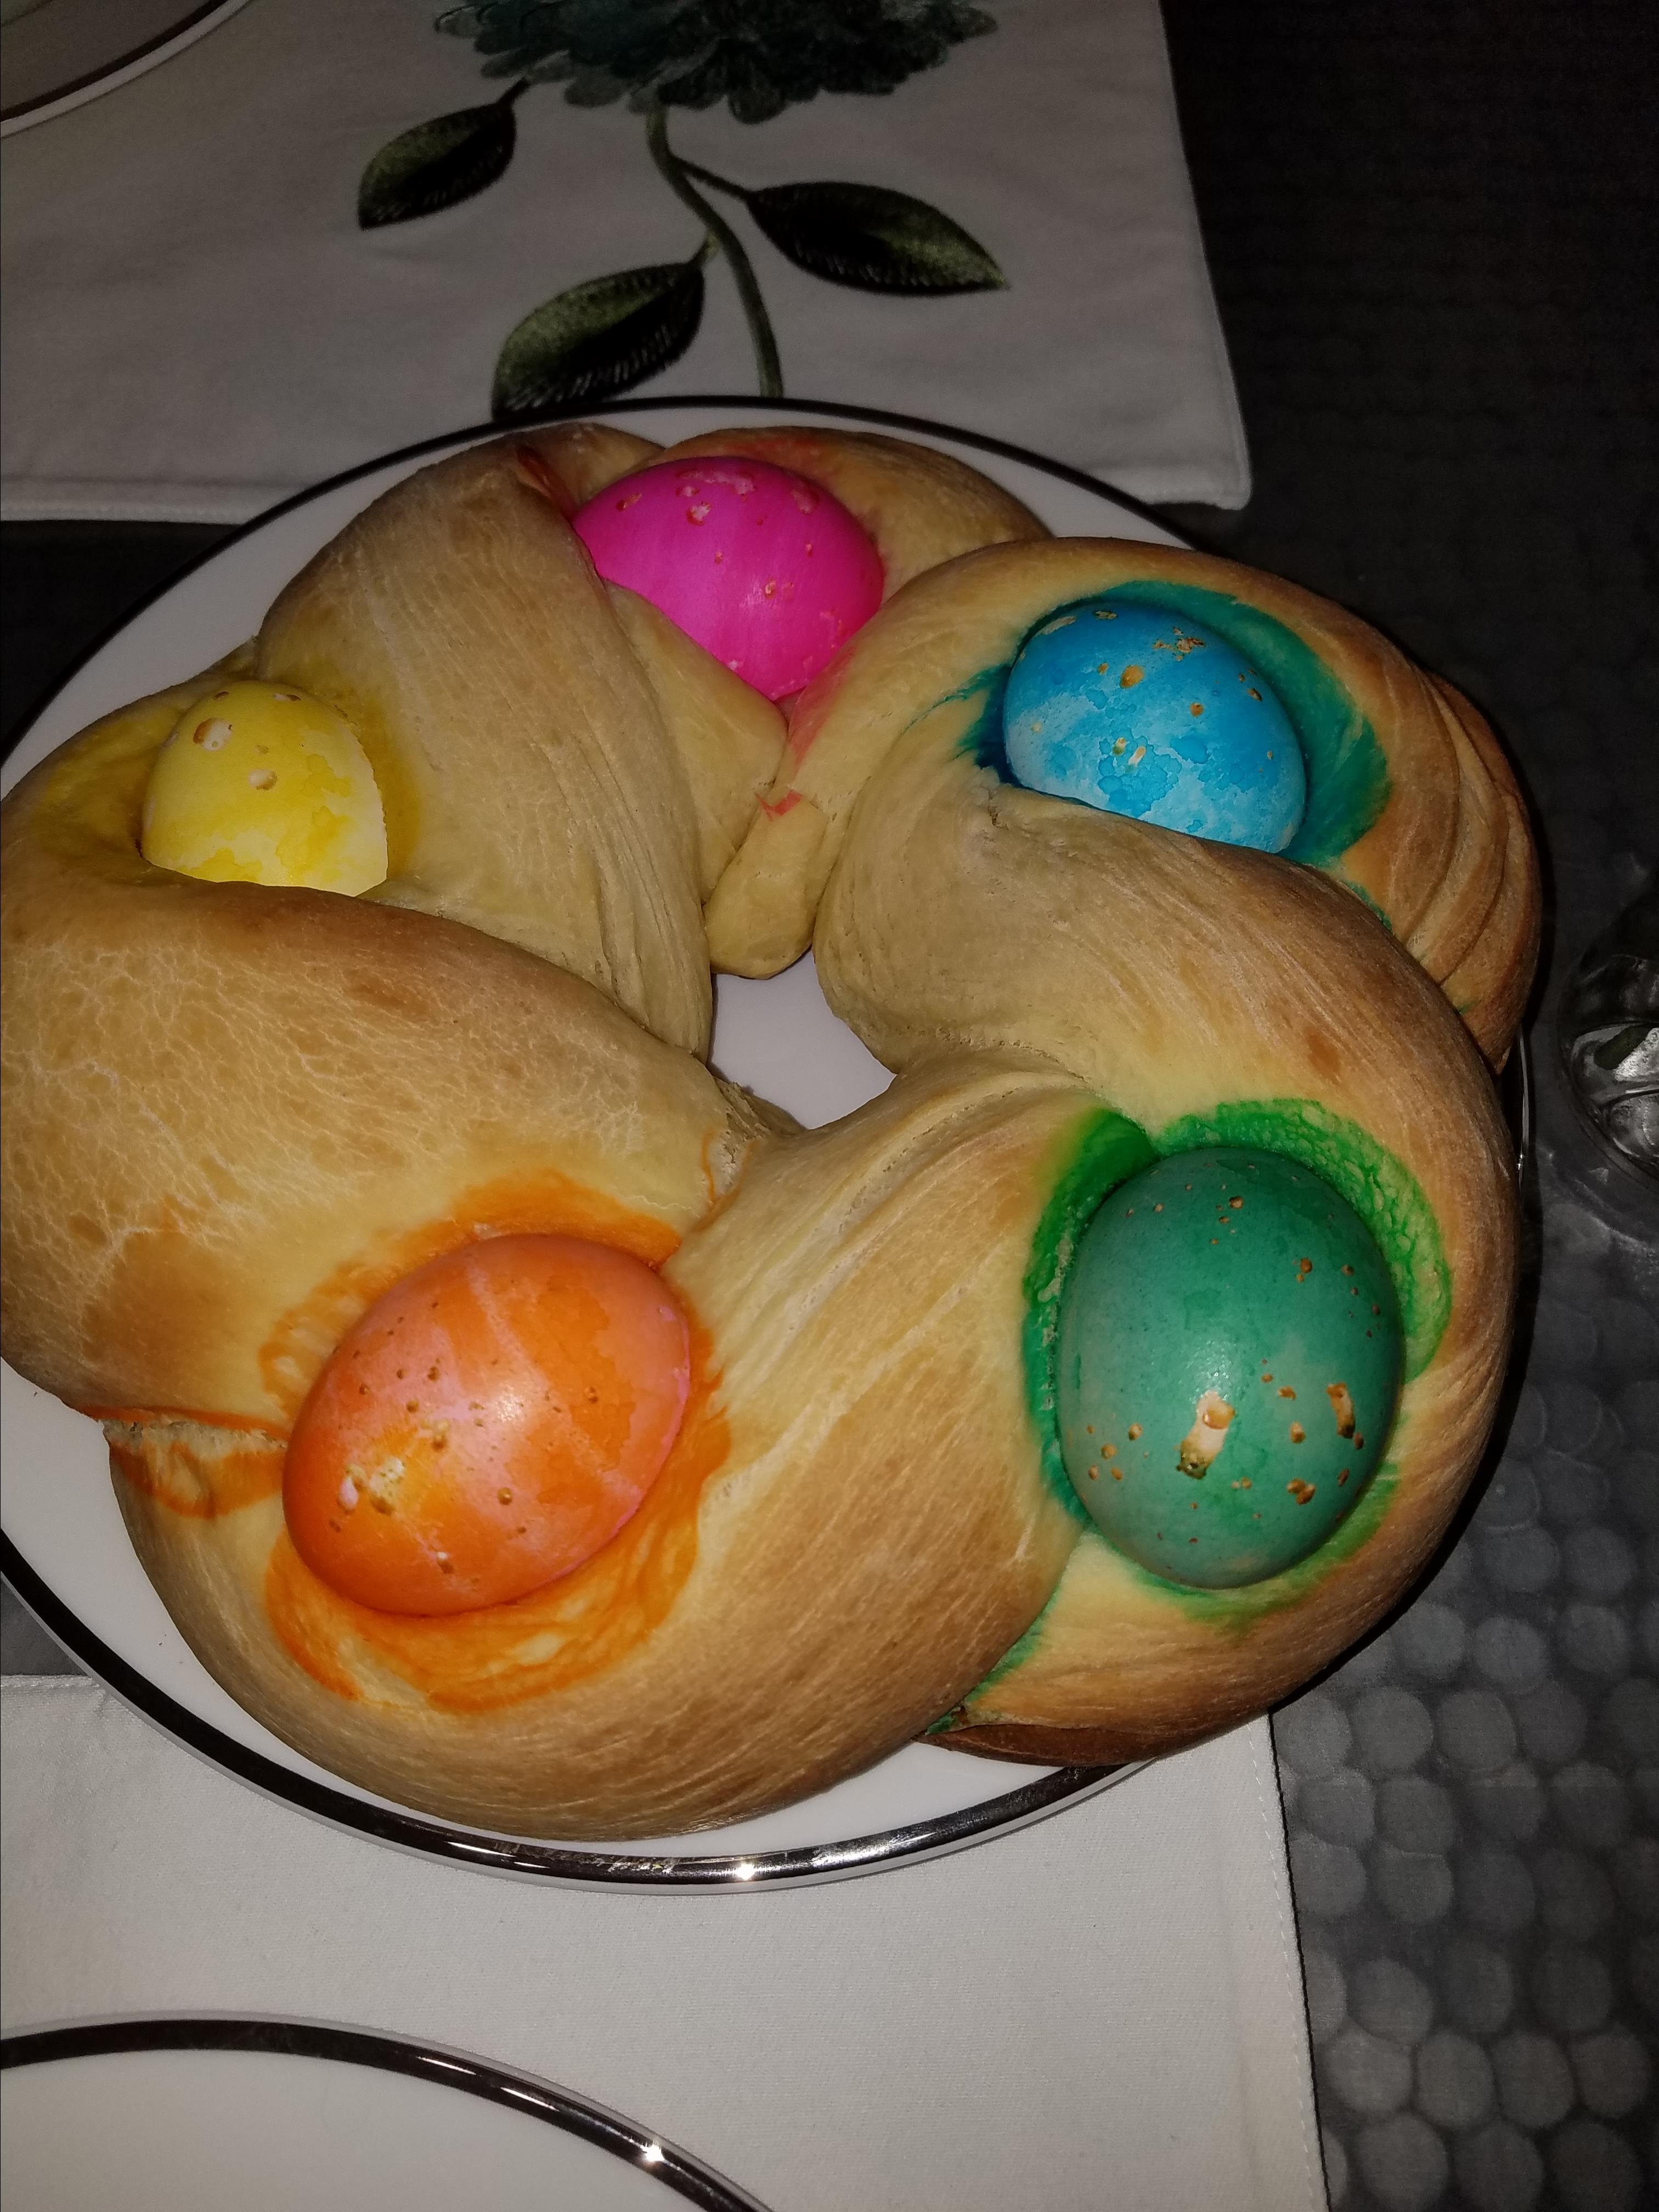 Braided Easter Egg Bread Recipe - Allrecipes.com